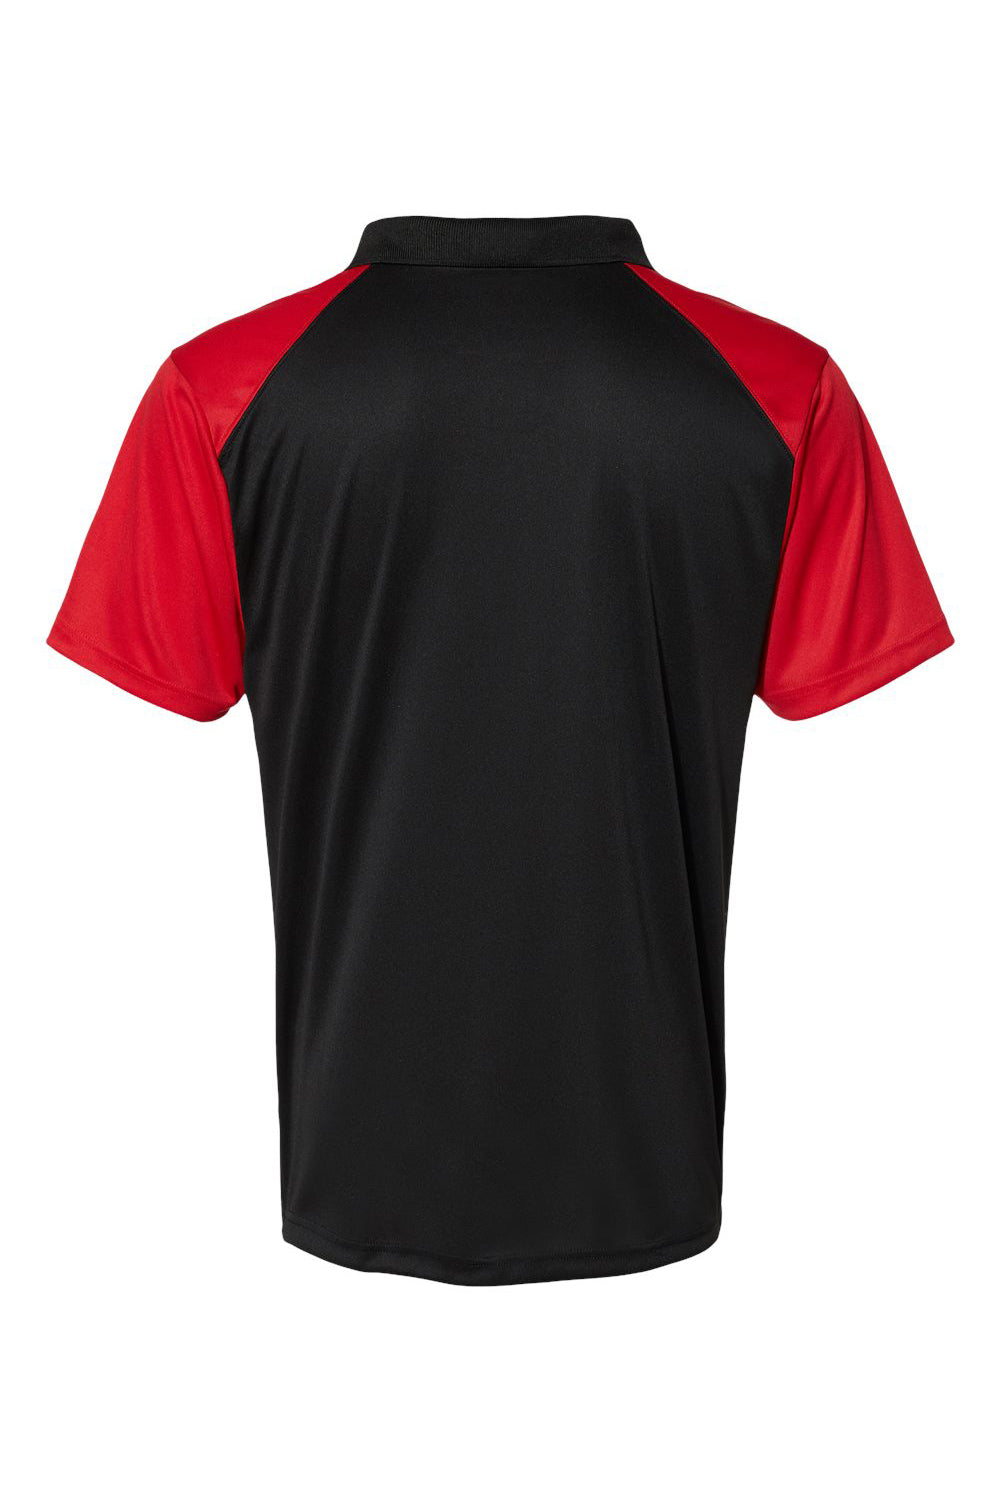 C2 Sport 5903 Mens Moisture Wicking Short Sleeve Polo Shirt Black/Red Flat Back